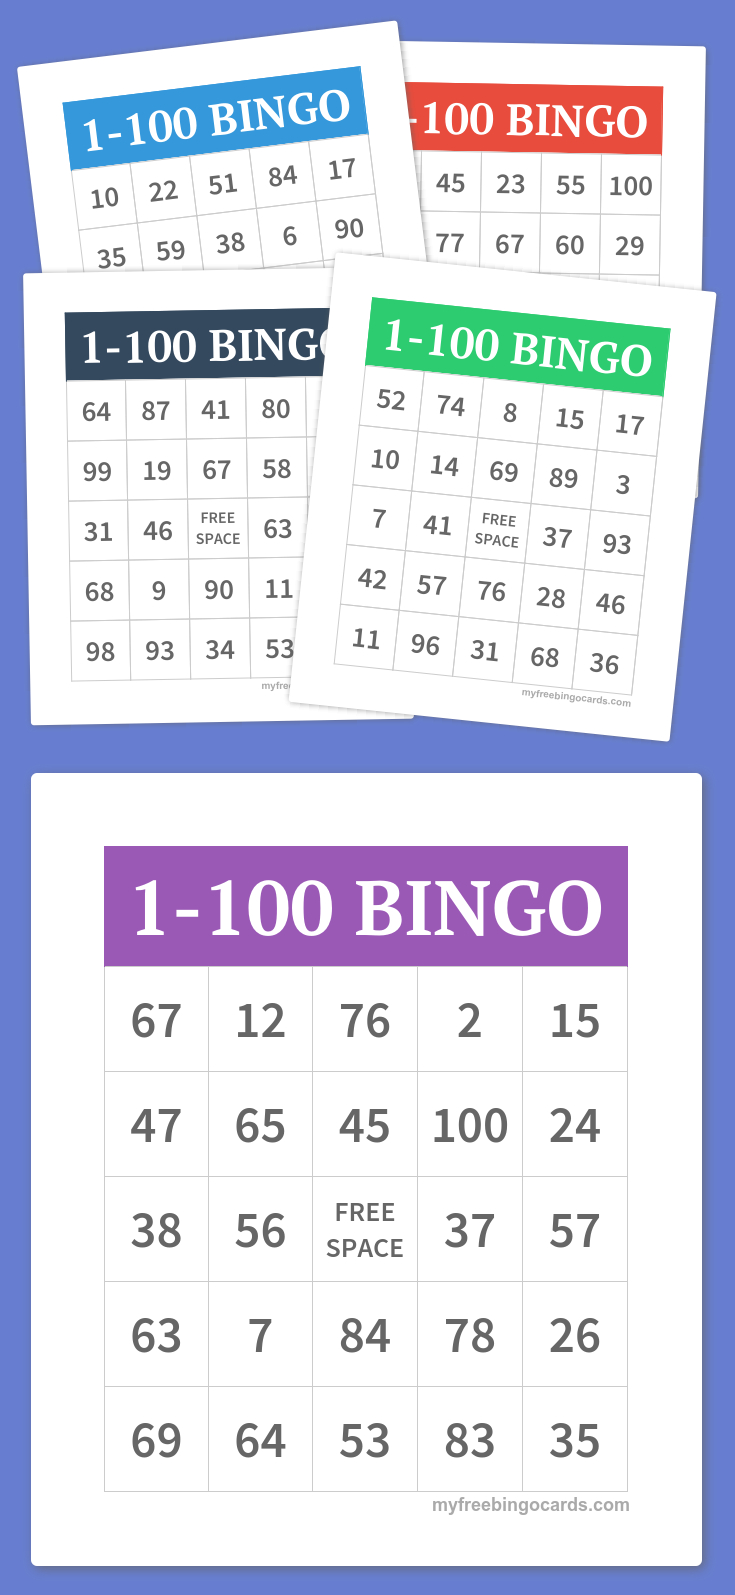 1-100 Bingo | Party Games - Free Printable Bingo Cards 1 100